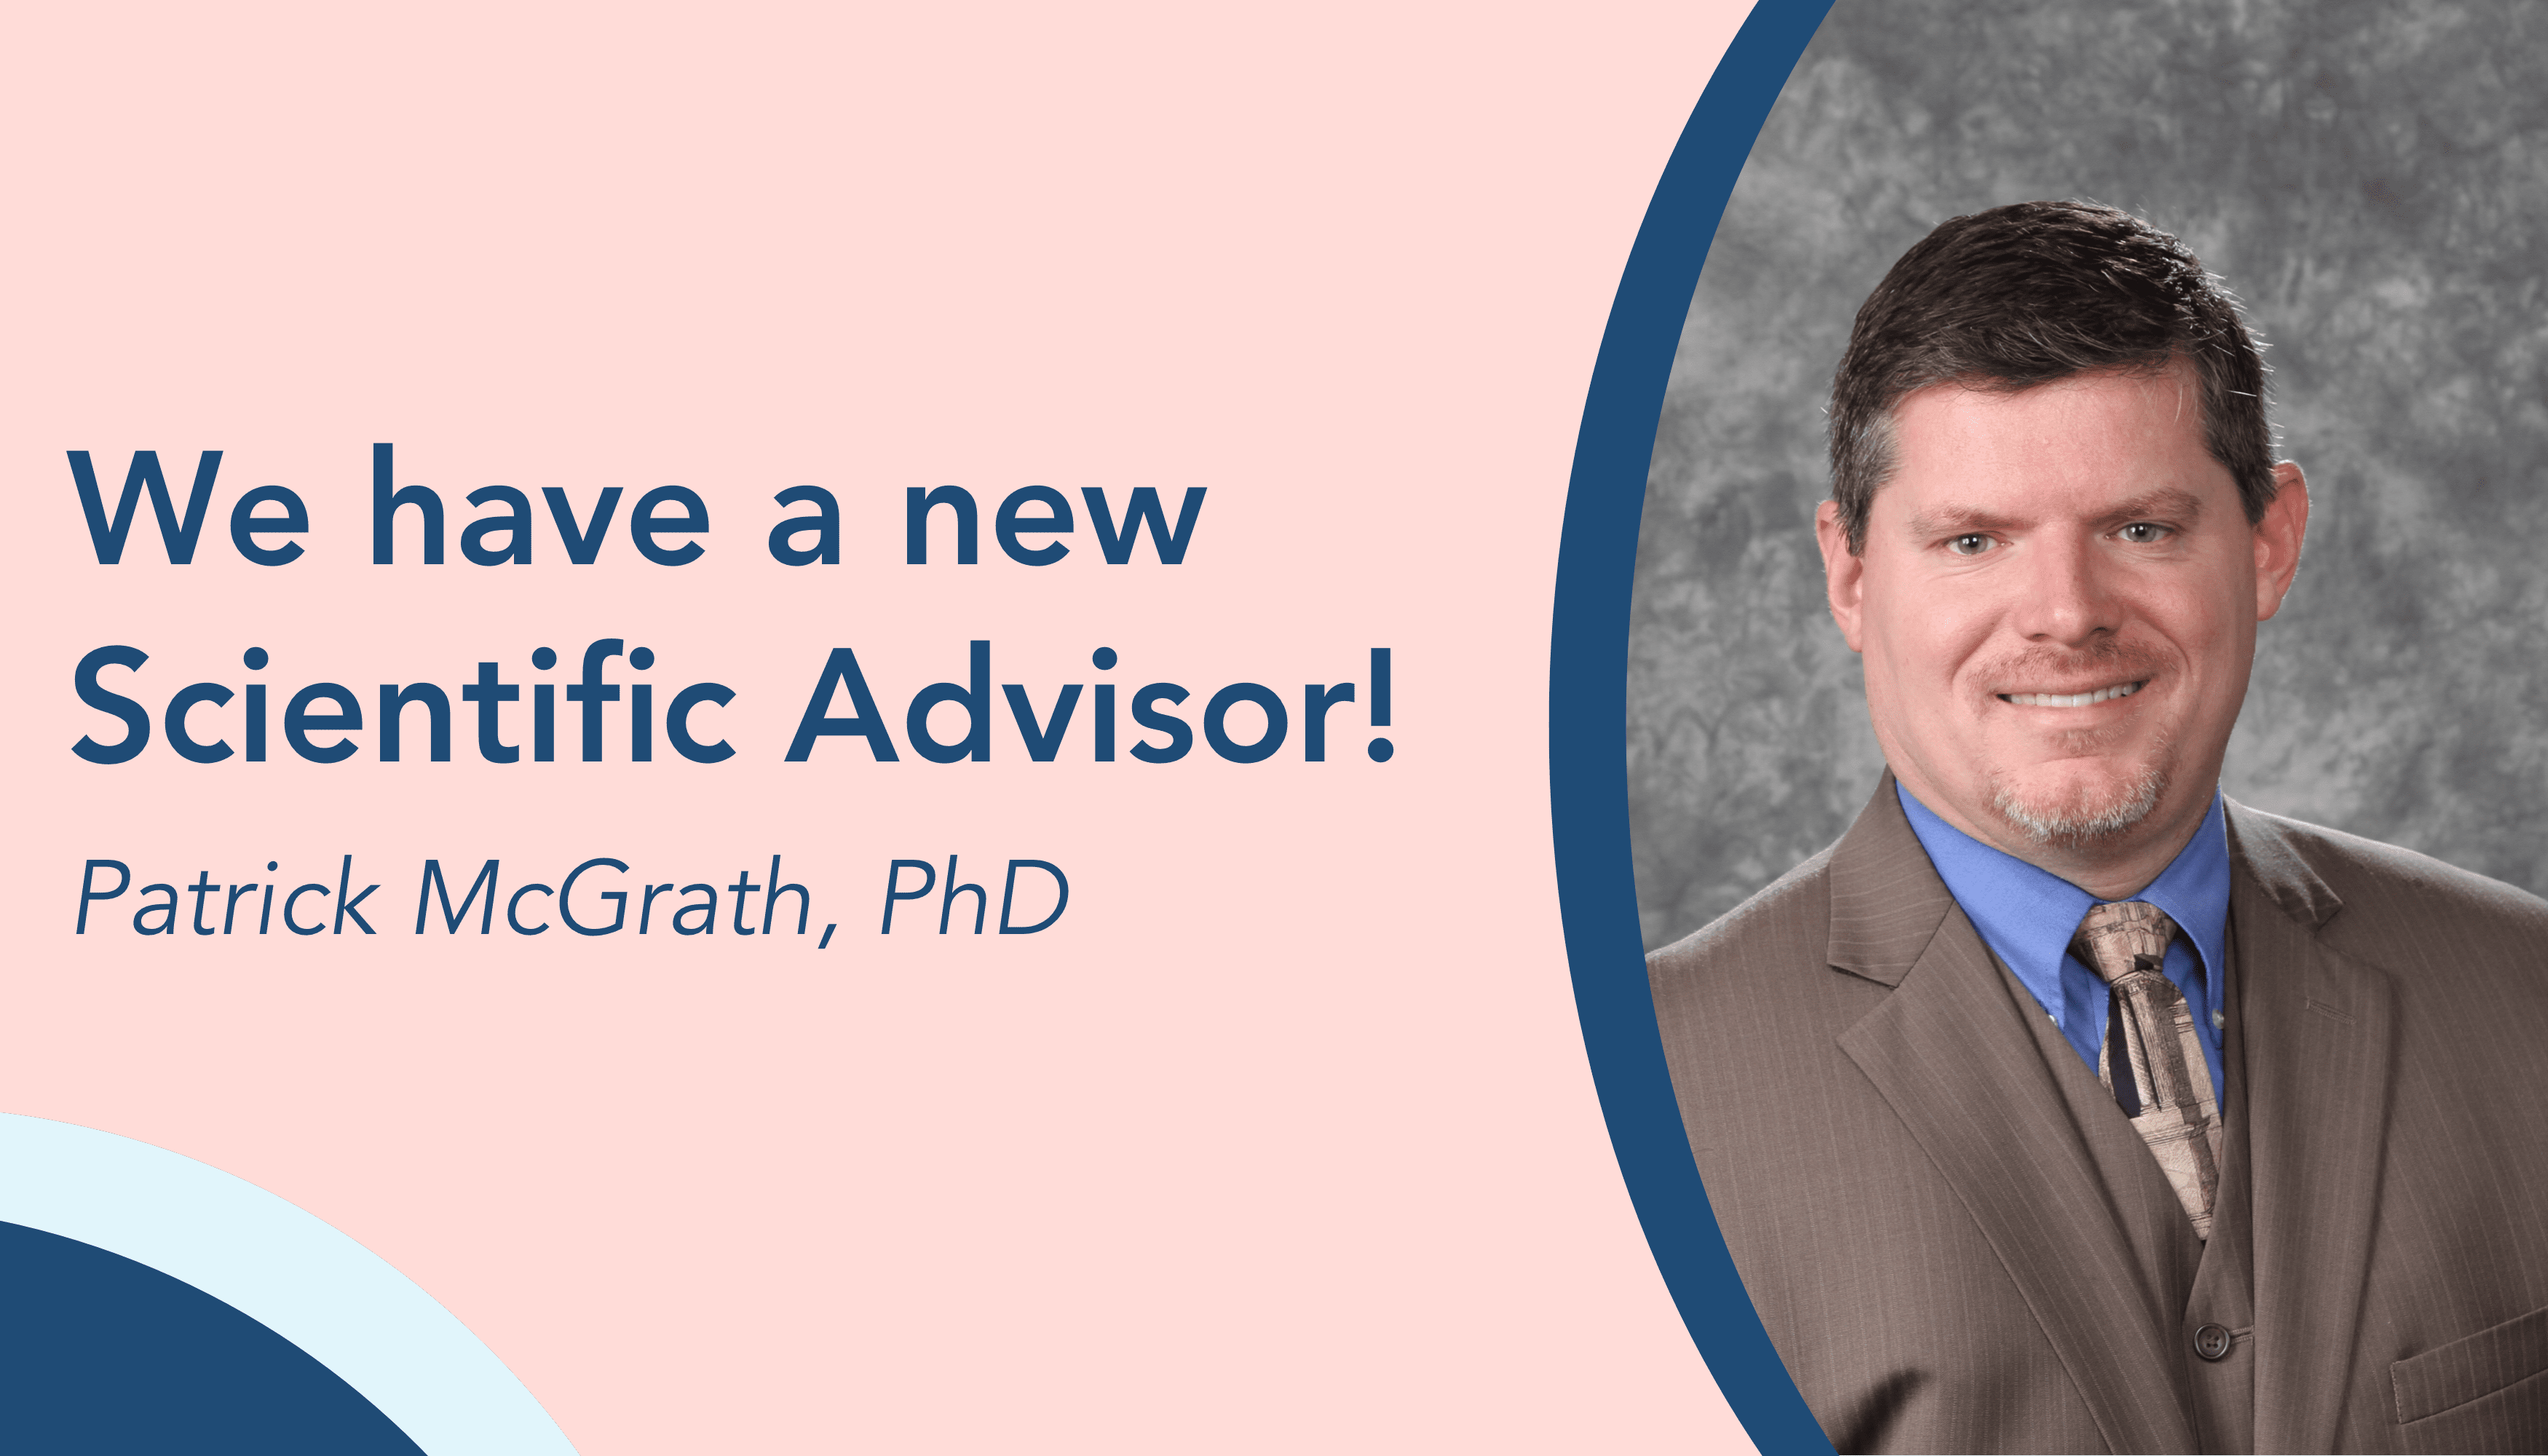 Our new Scientific Advisor Dr Patrick McGrath, PhD